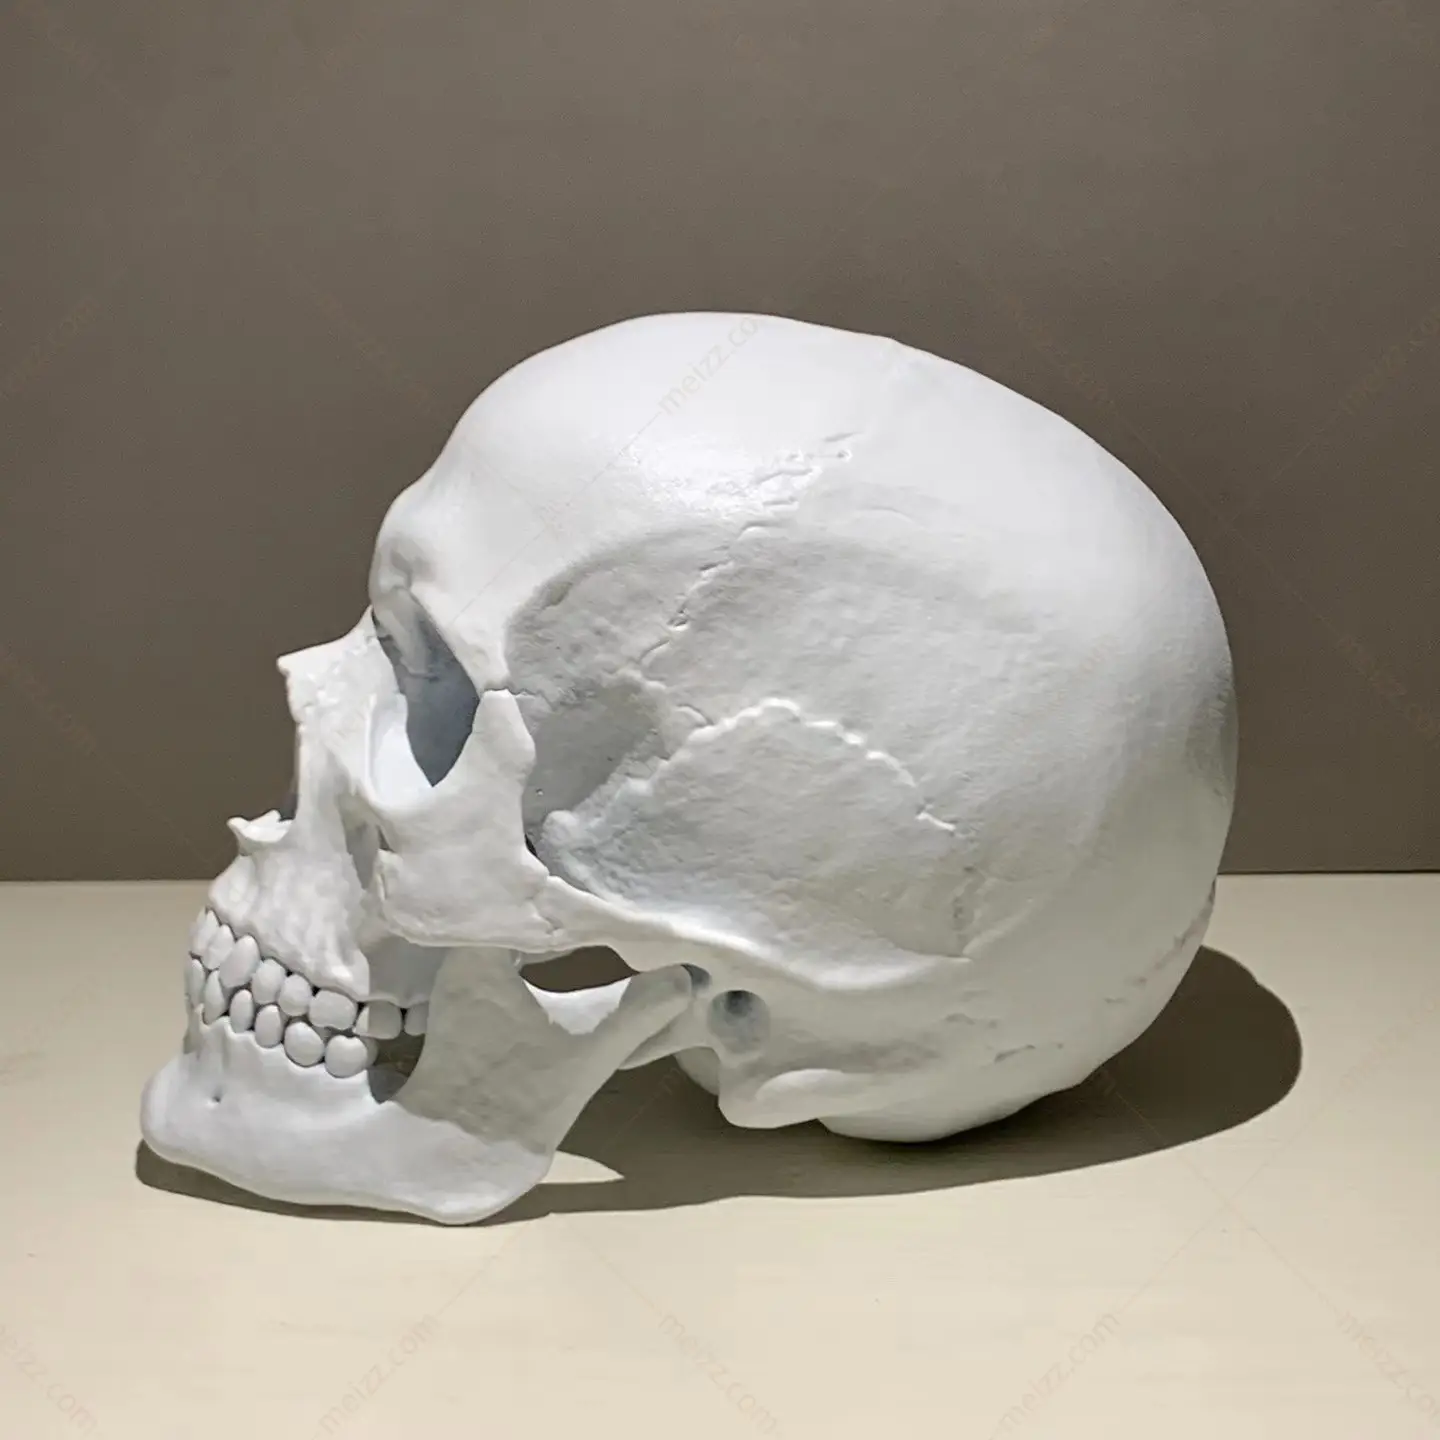 human skull sculpture